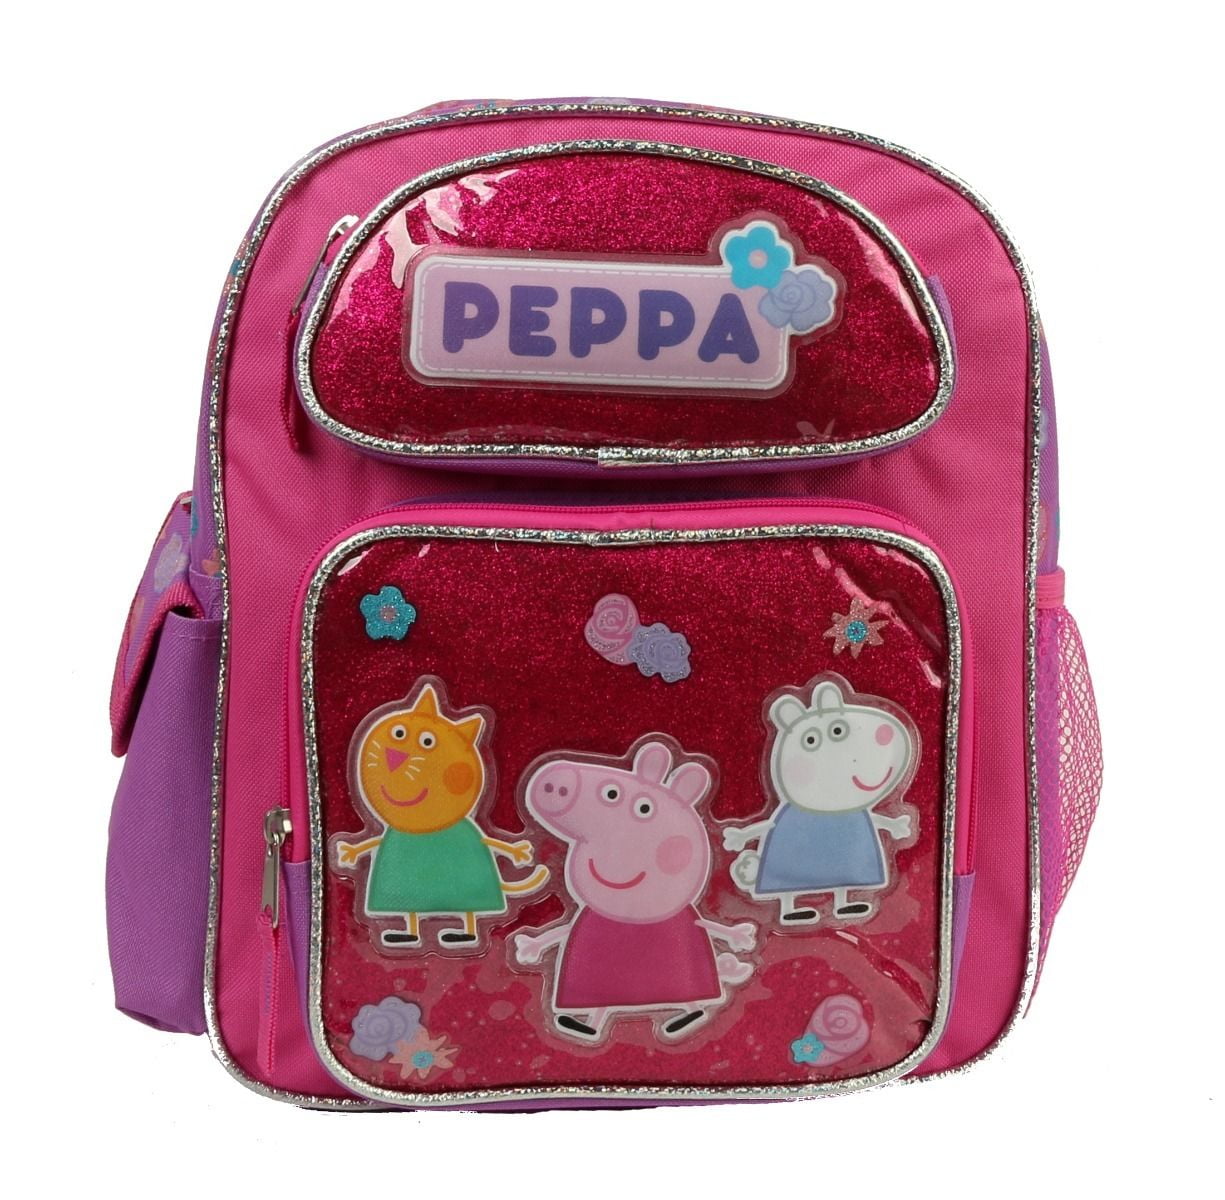 Buy/Send Peppa Pig Bag for Kids Online @ Rs. 699 - SendBestGift